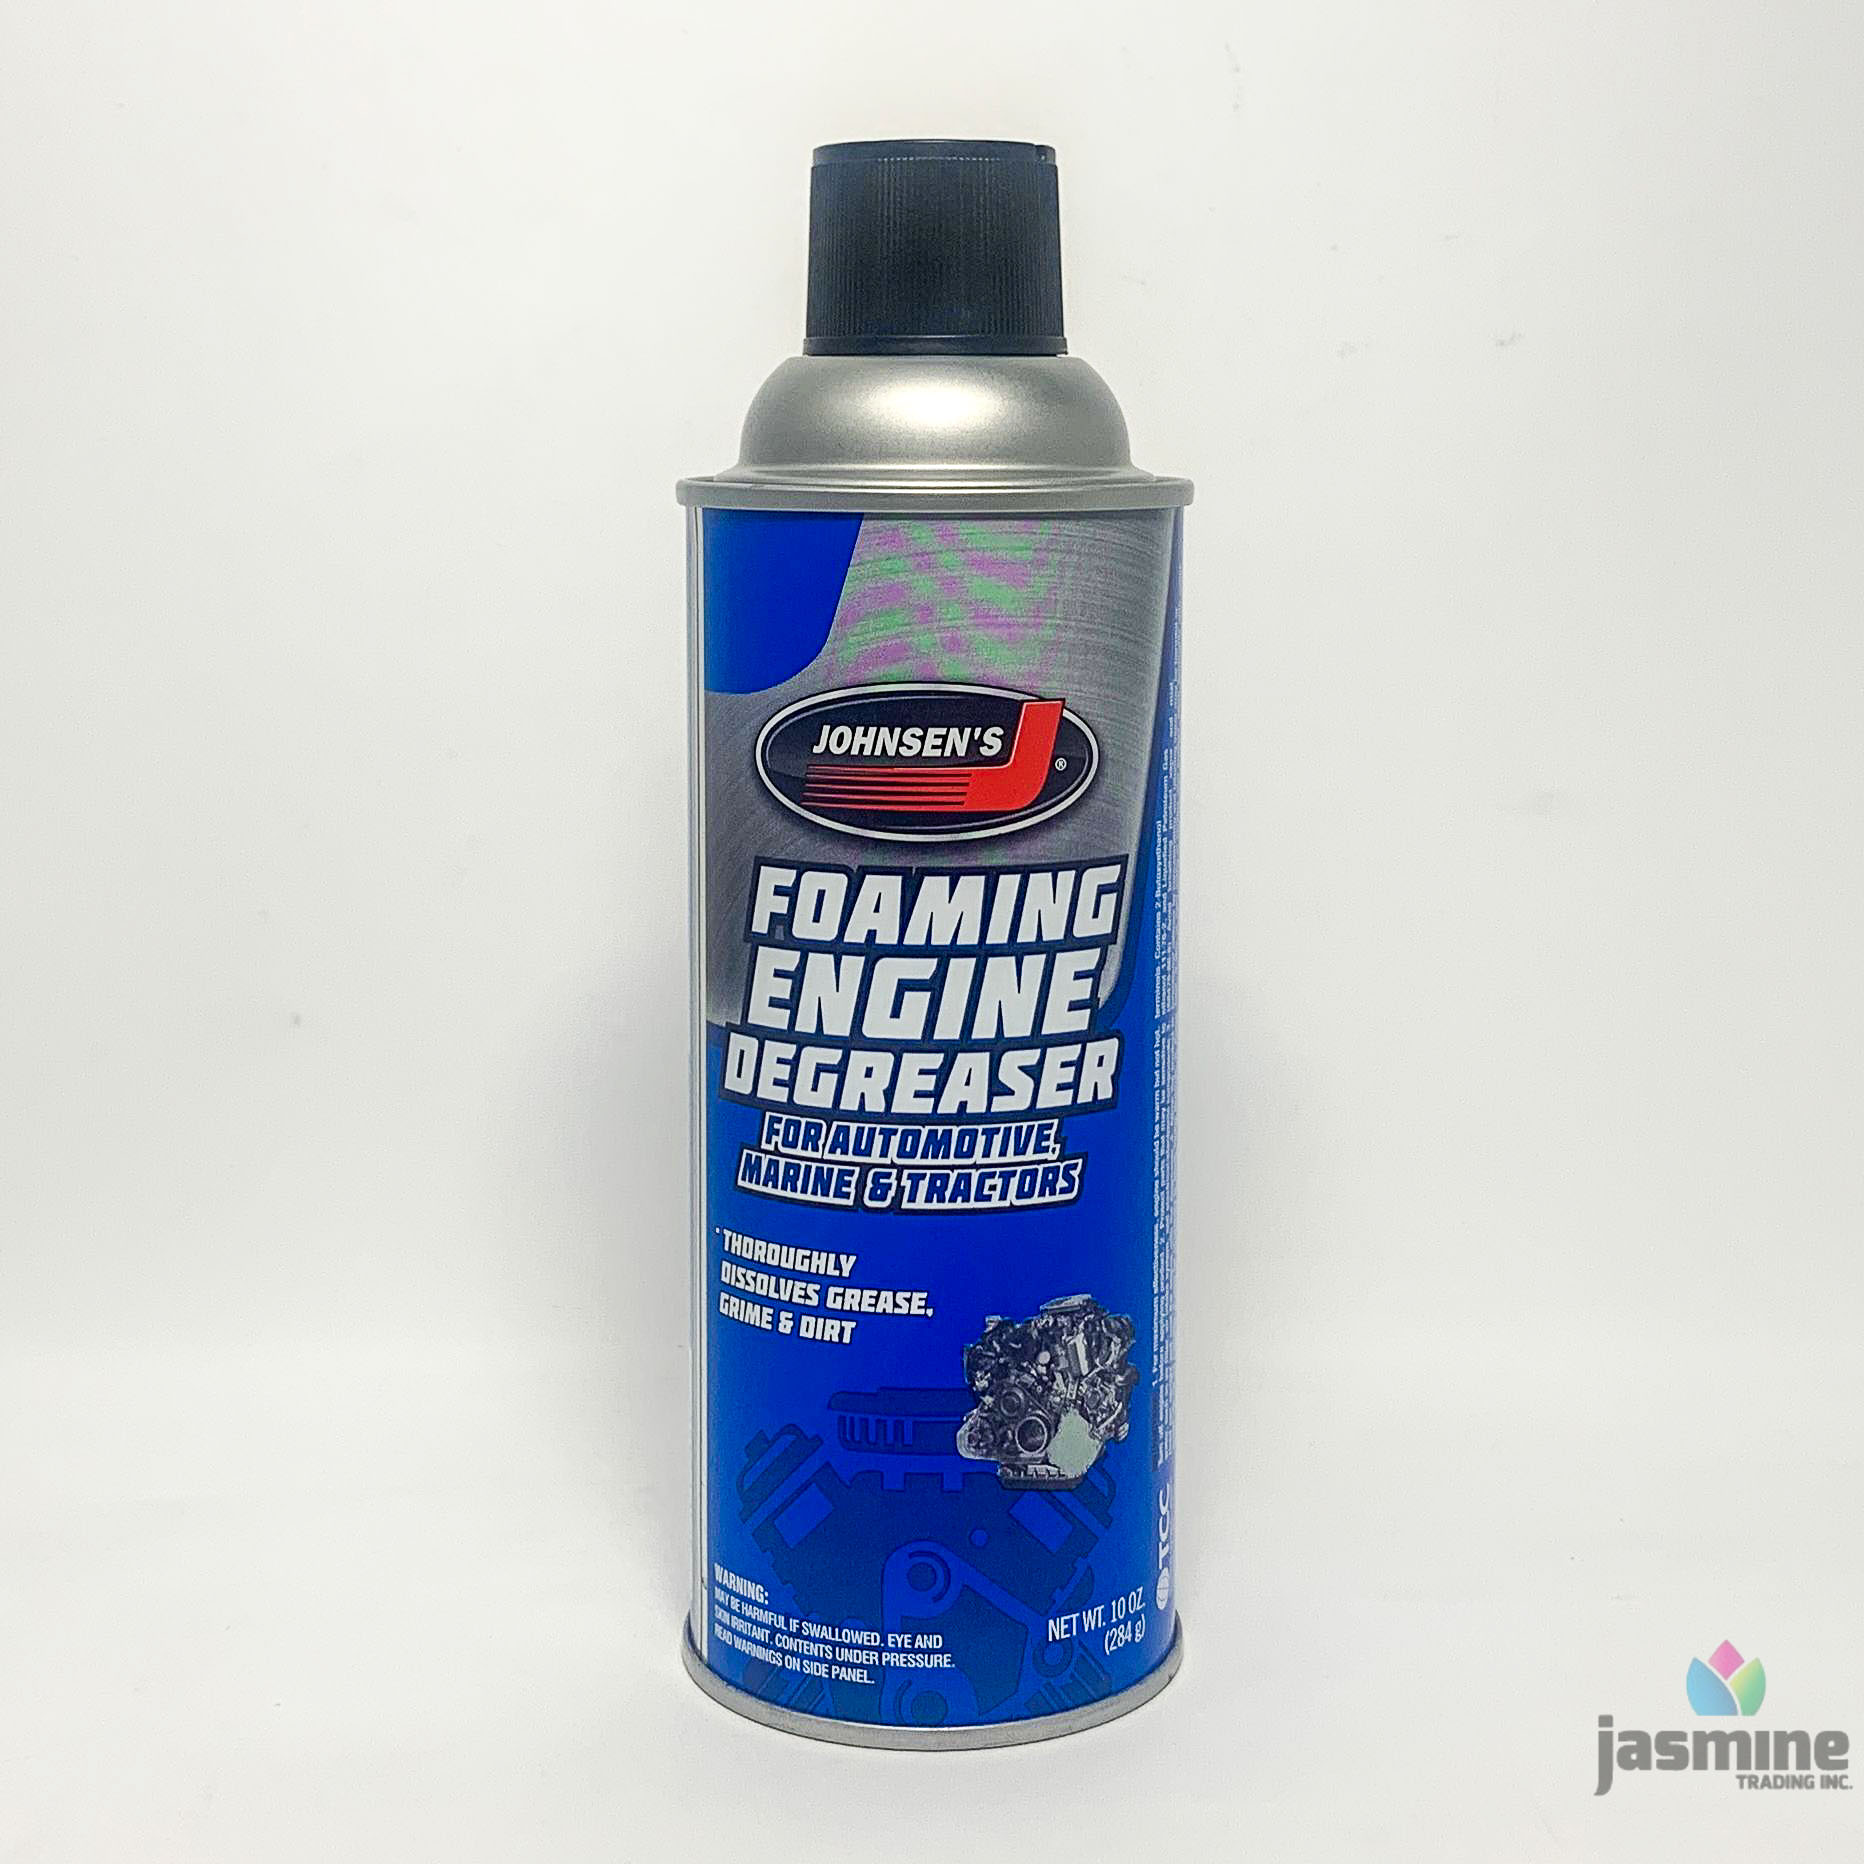 Foaming Cleaner & Engine Degreaser